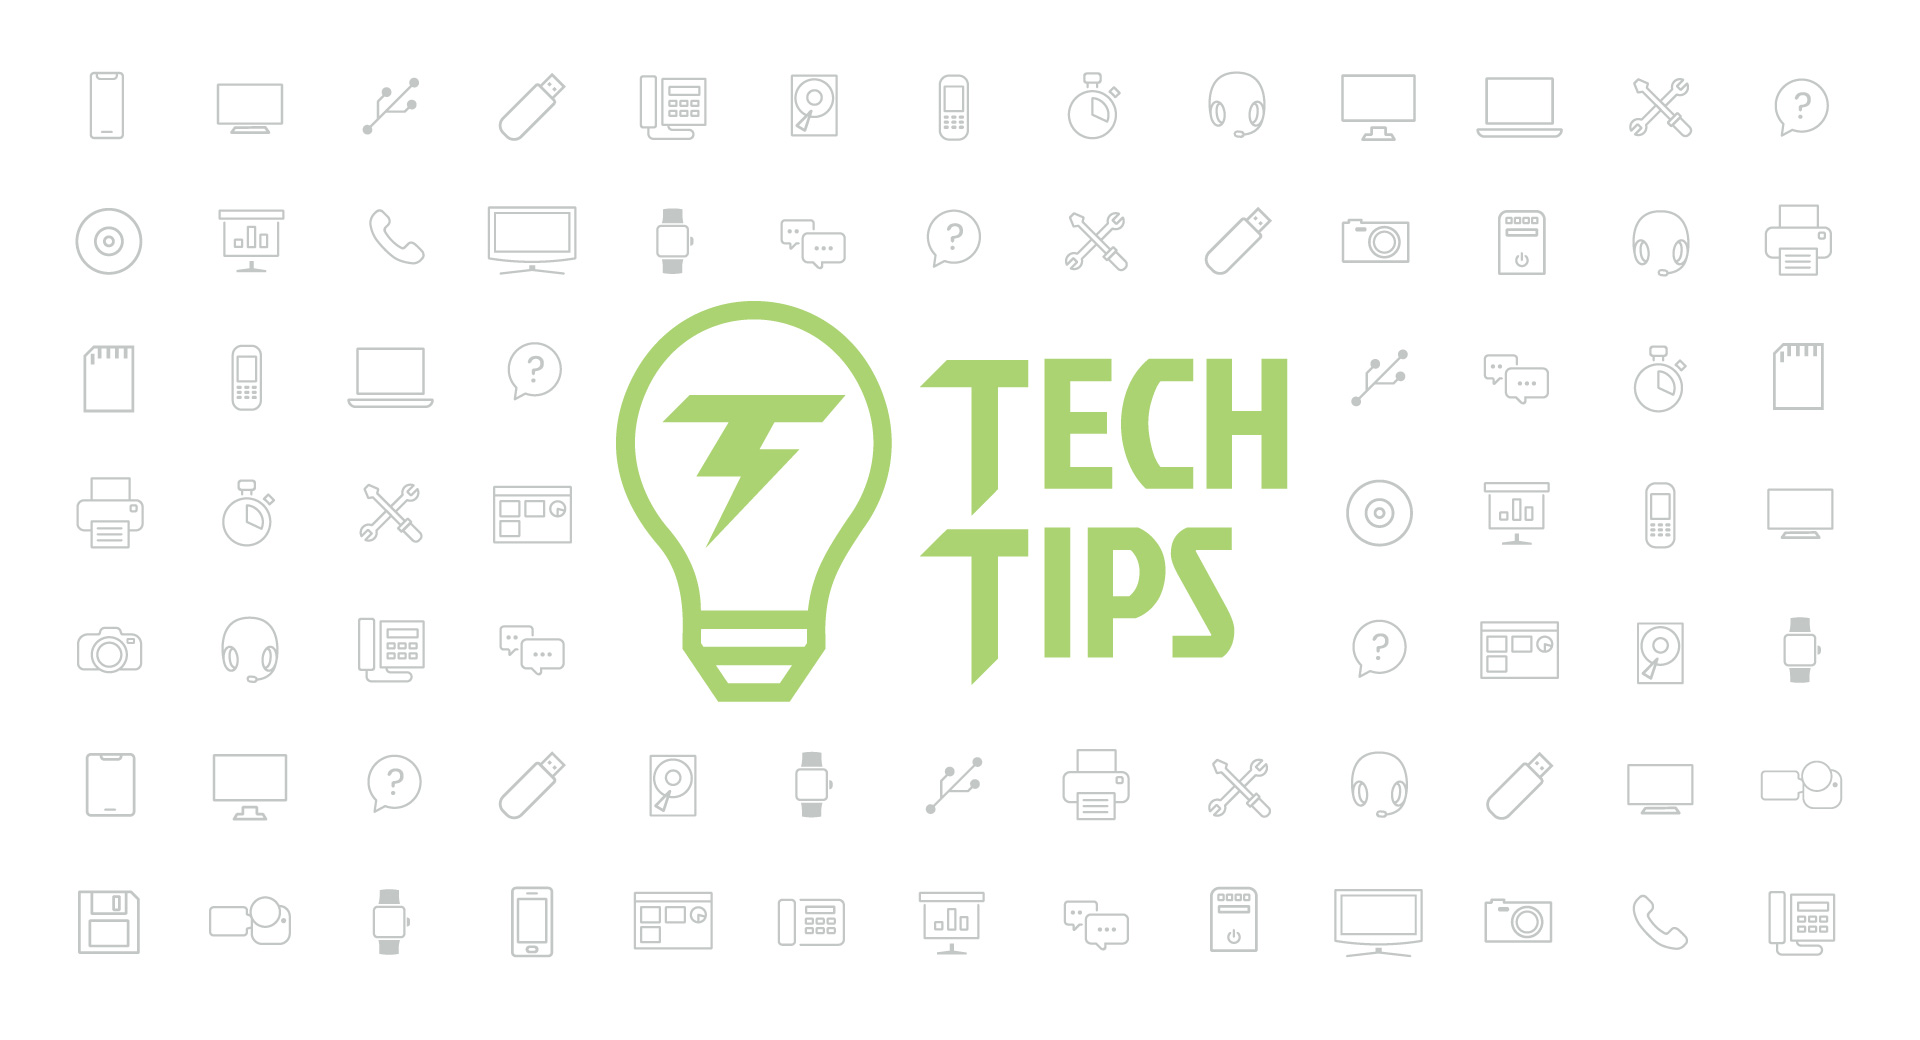 Technology Tips: September 2015 Edition 